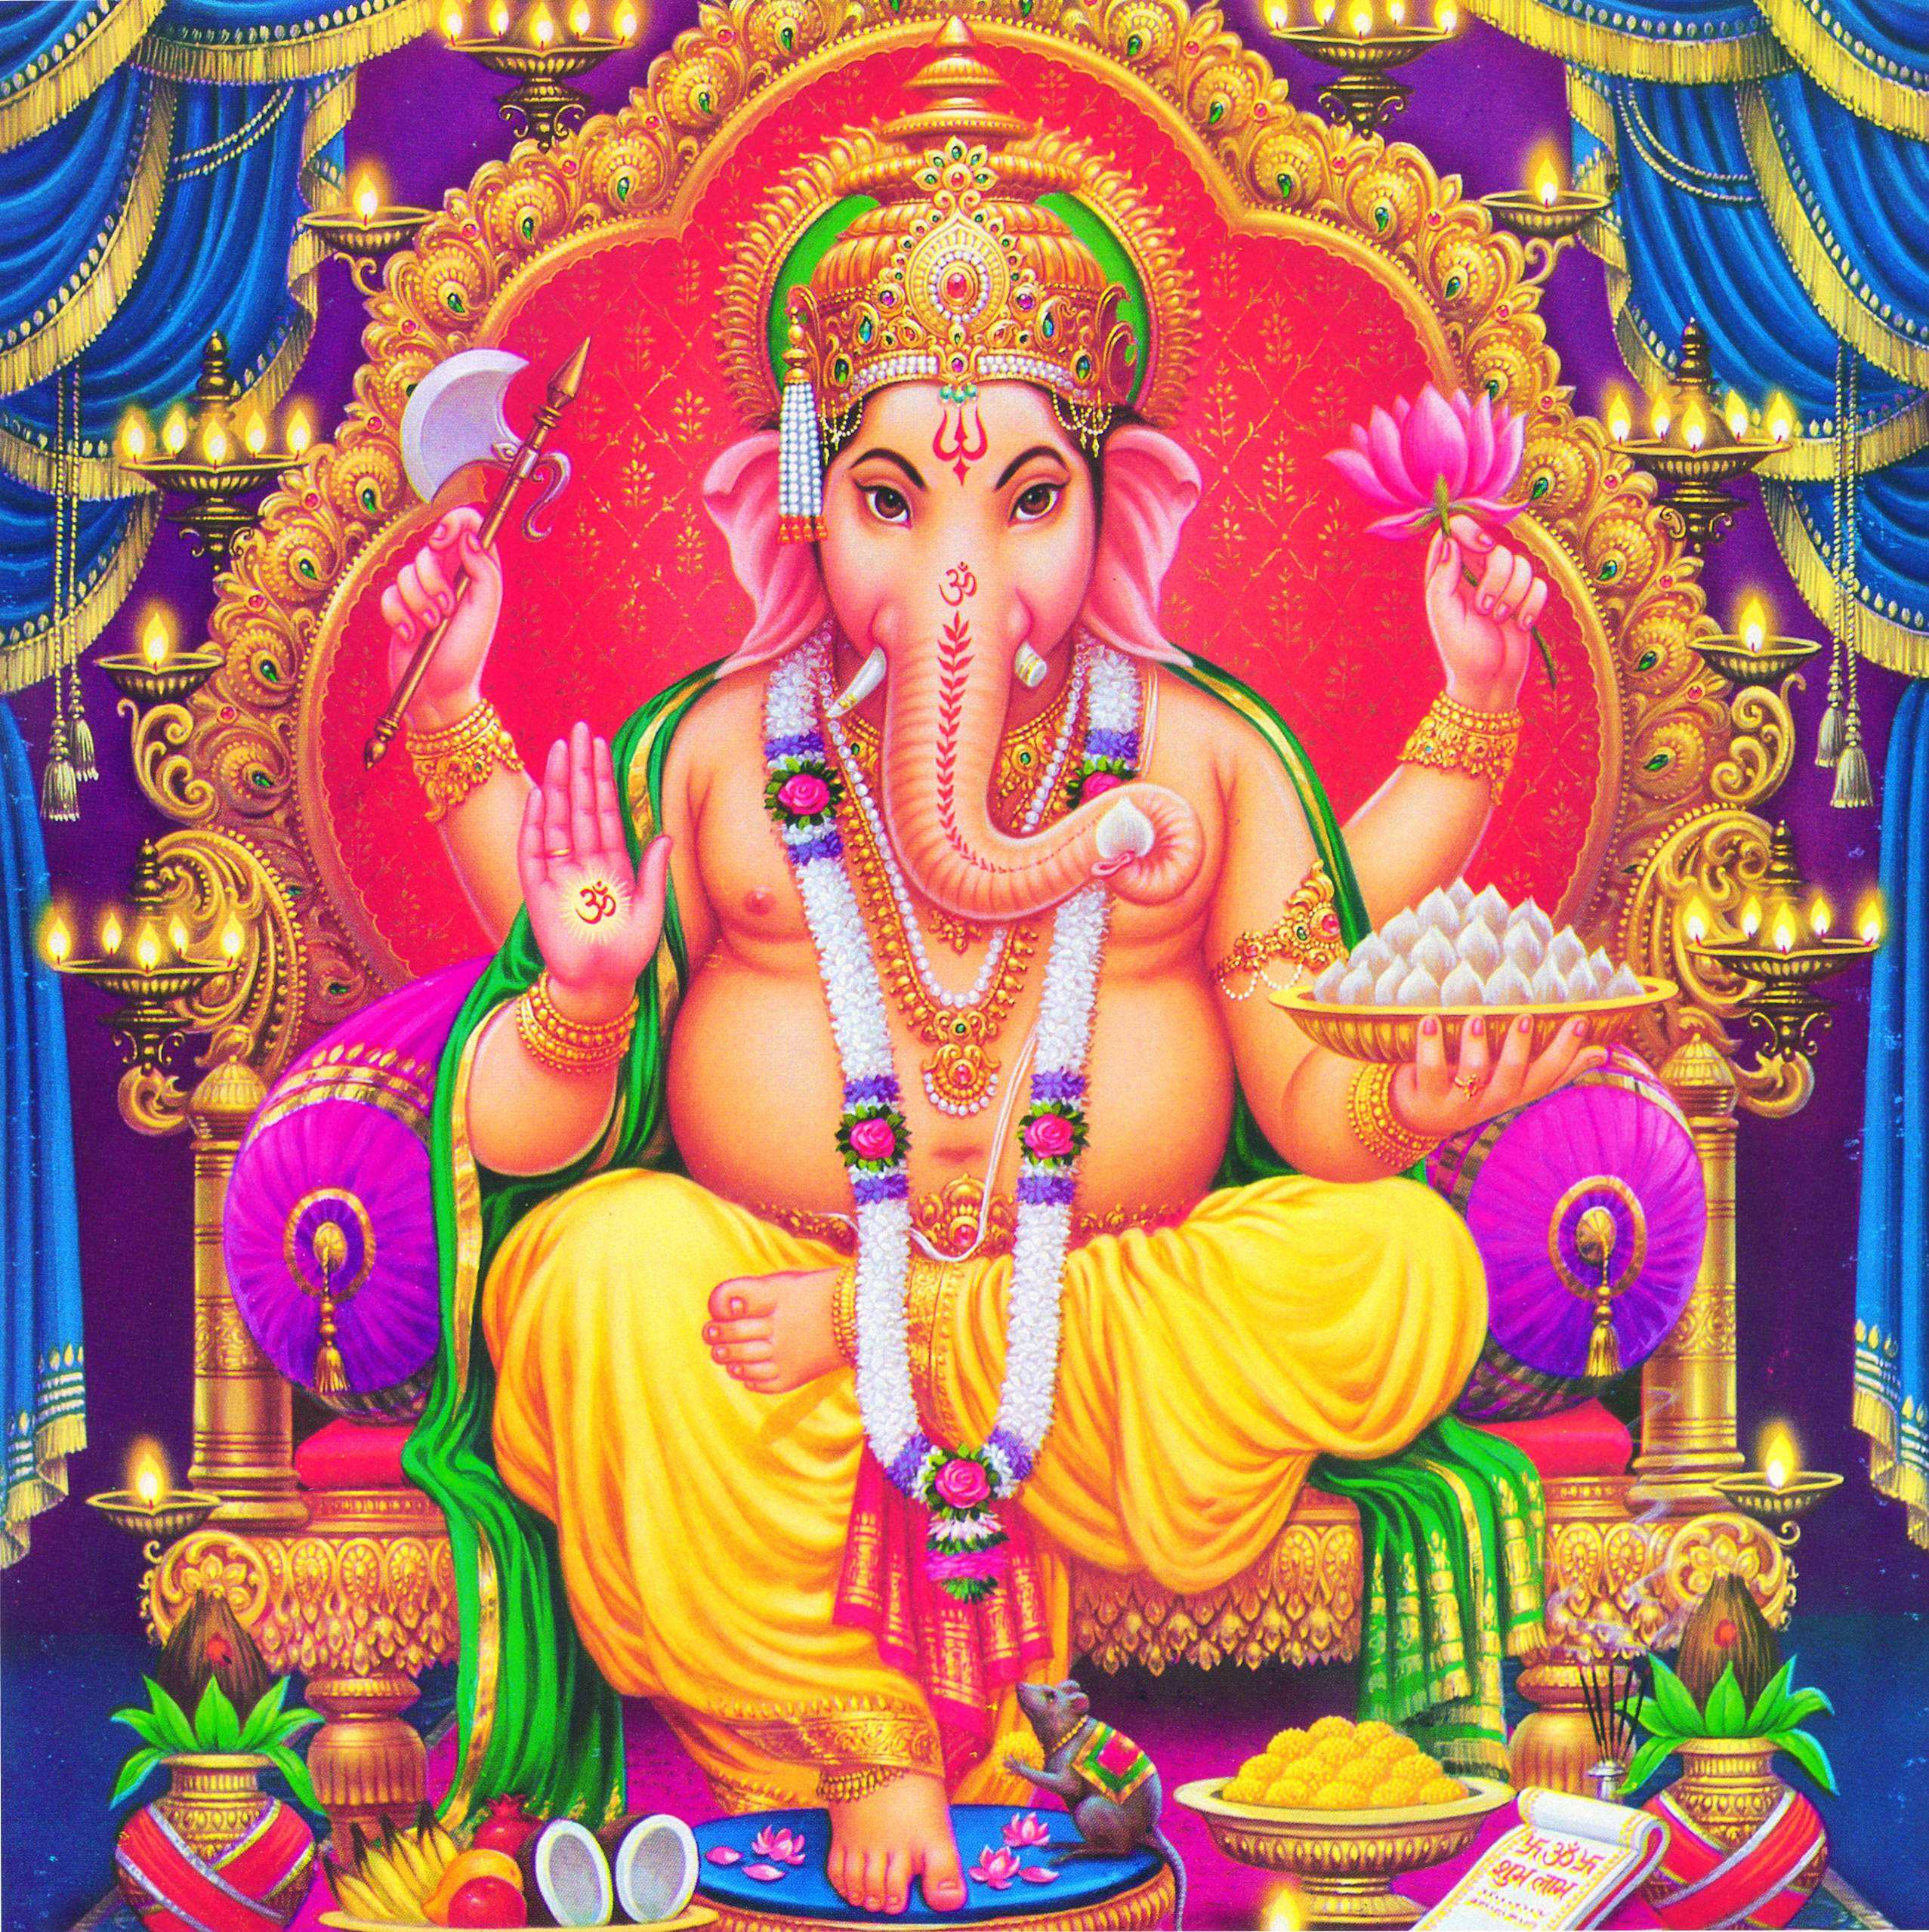 Free Ganesh Image, Download Free Clip Art, Free Clip Art